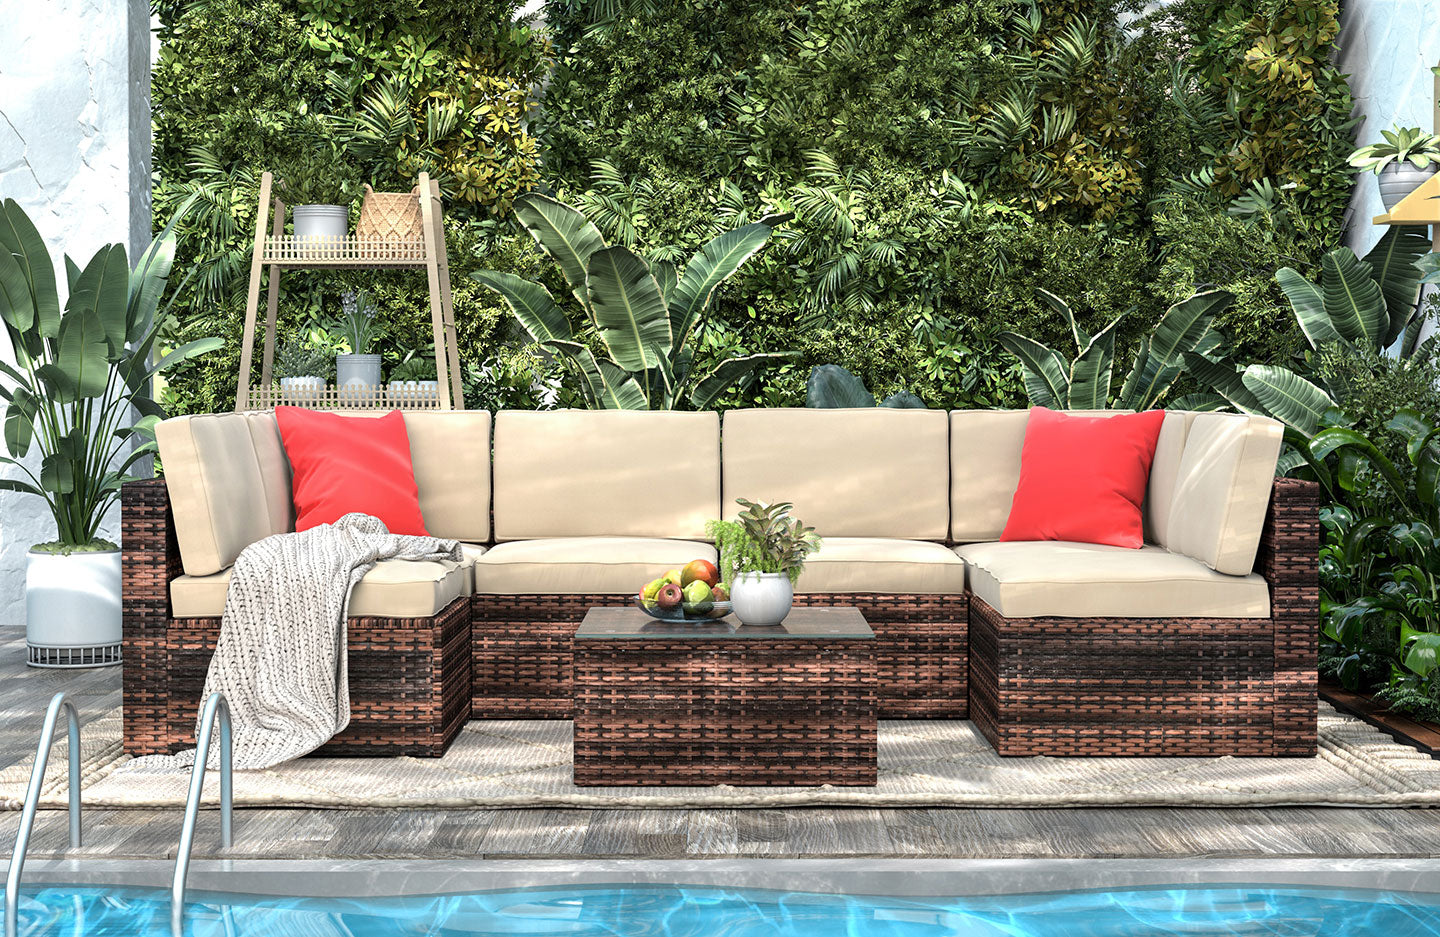 6 Seater Garden Furniture Set  For Lawn Backyard Poolside